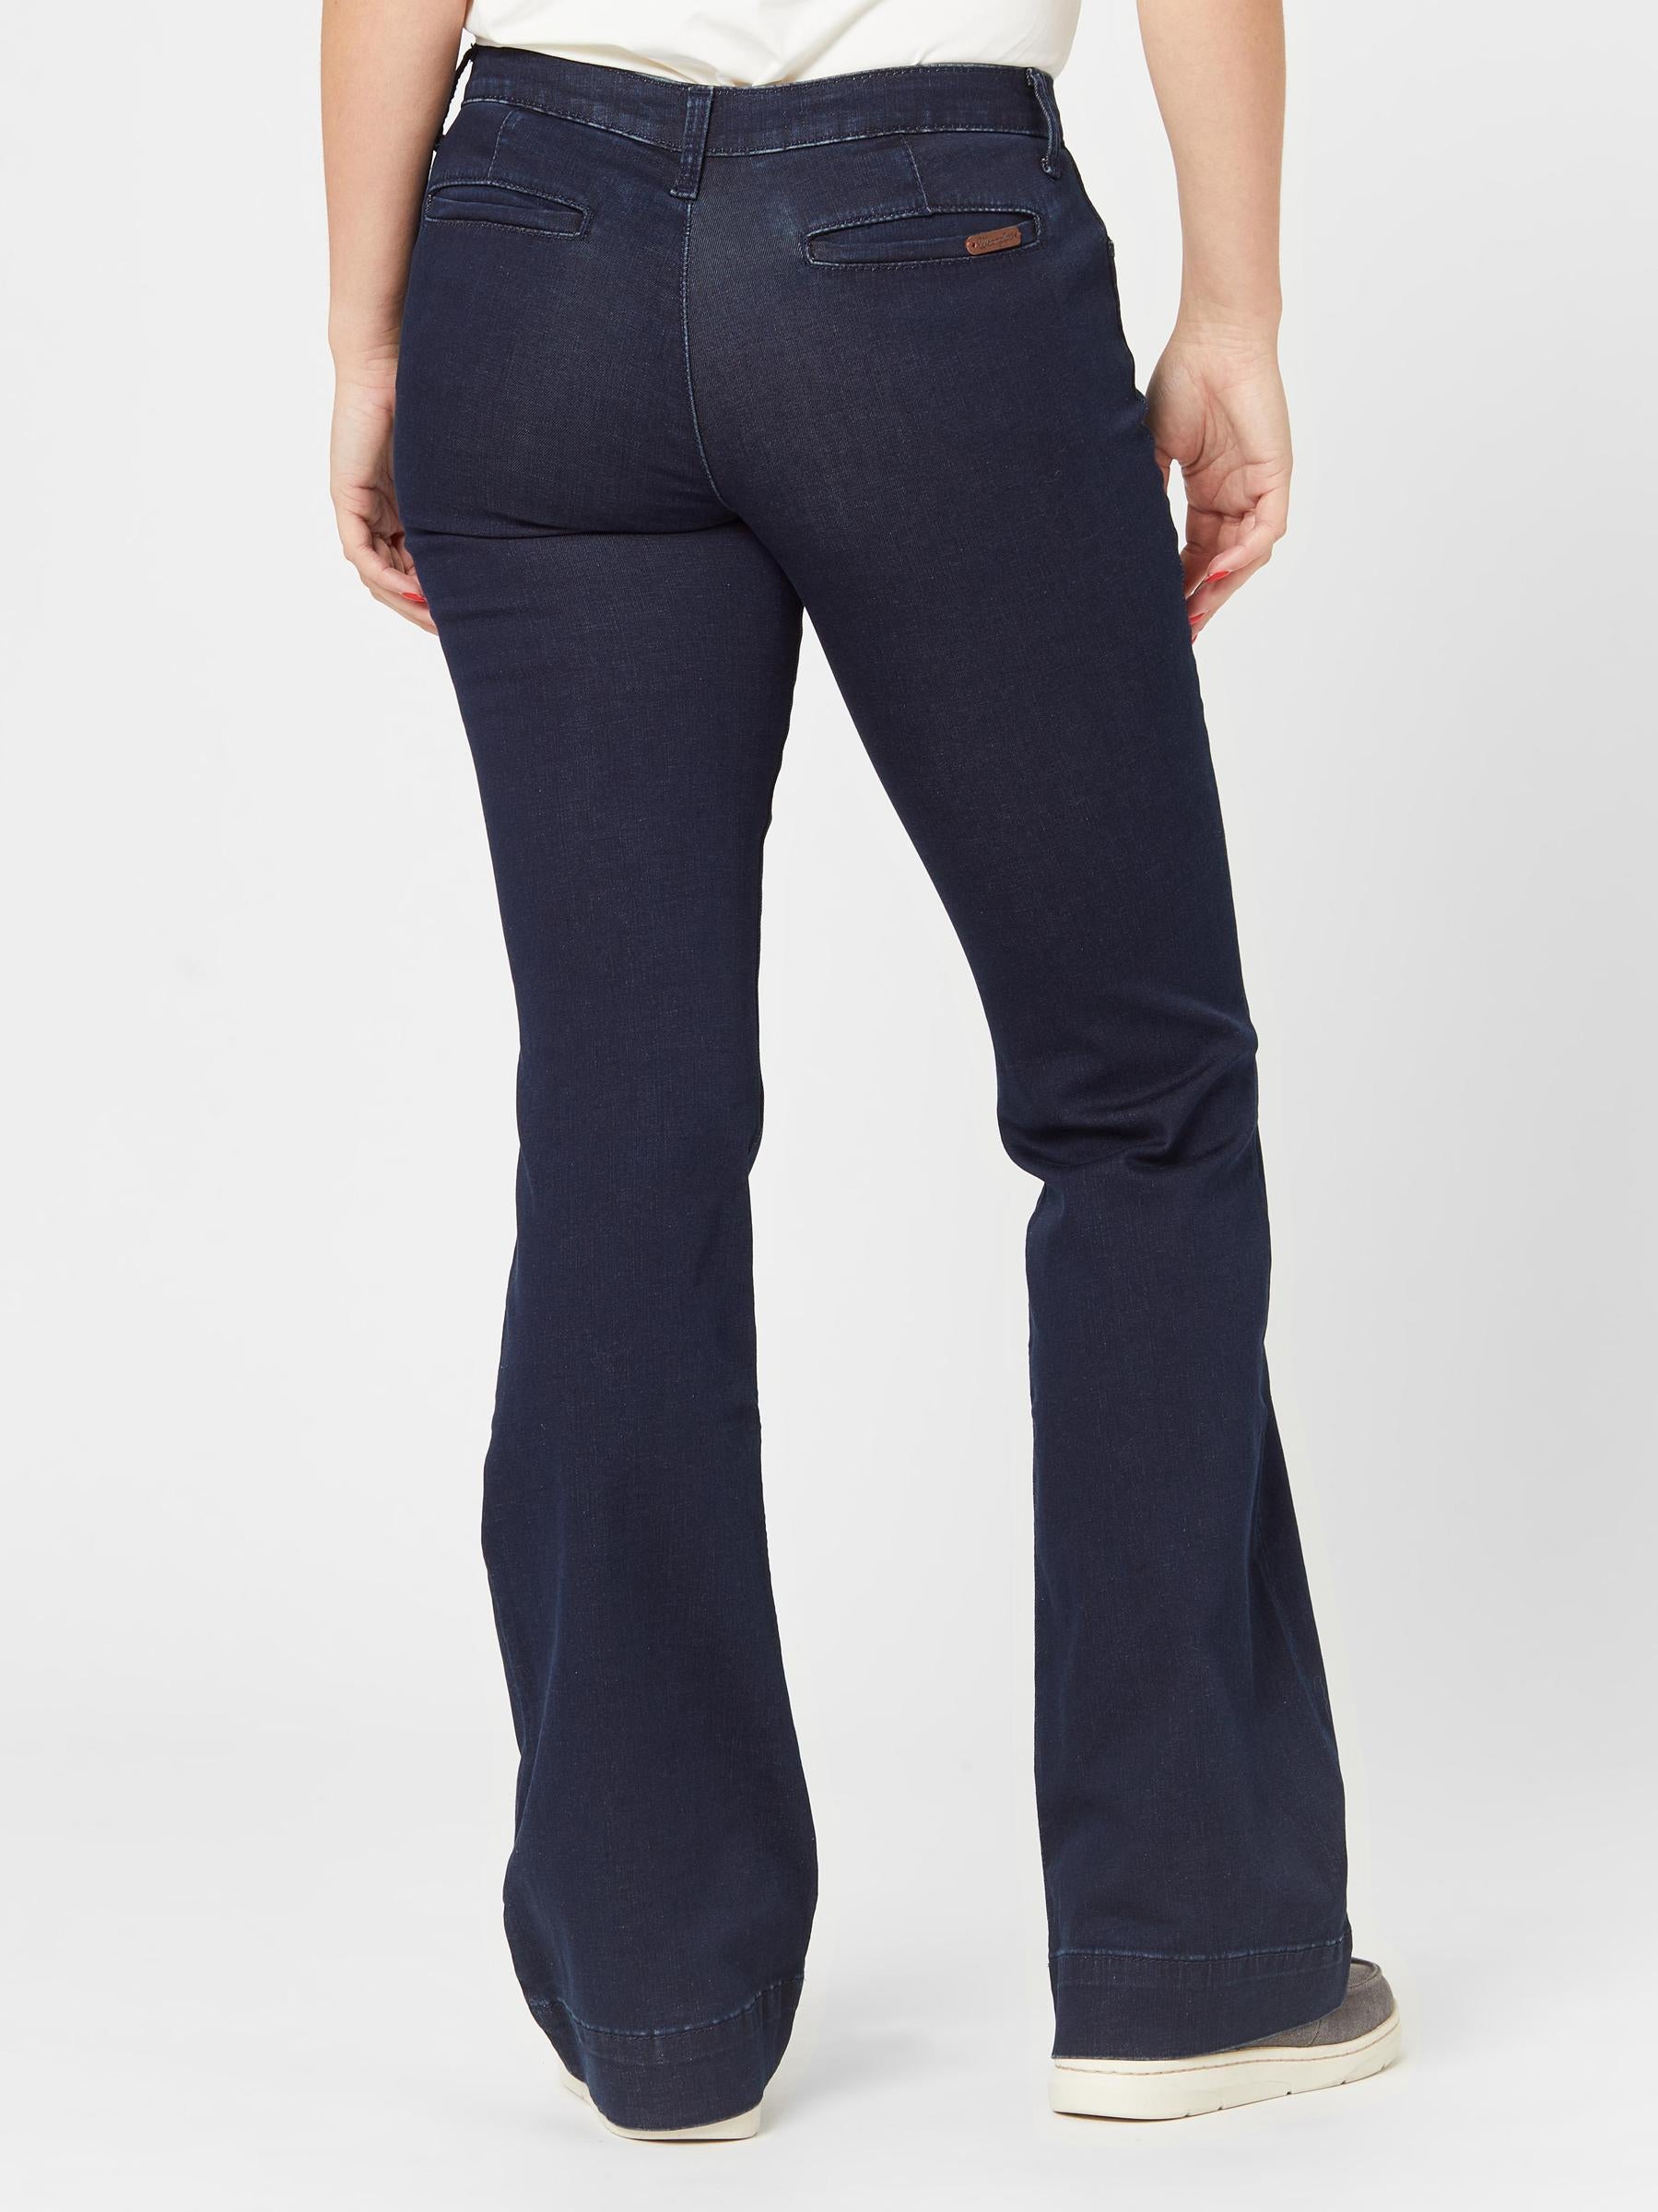 Wrangler Women's Mae Retro Mid-Rise Trouser Jeans- Dark - Riding Warehouse